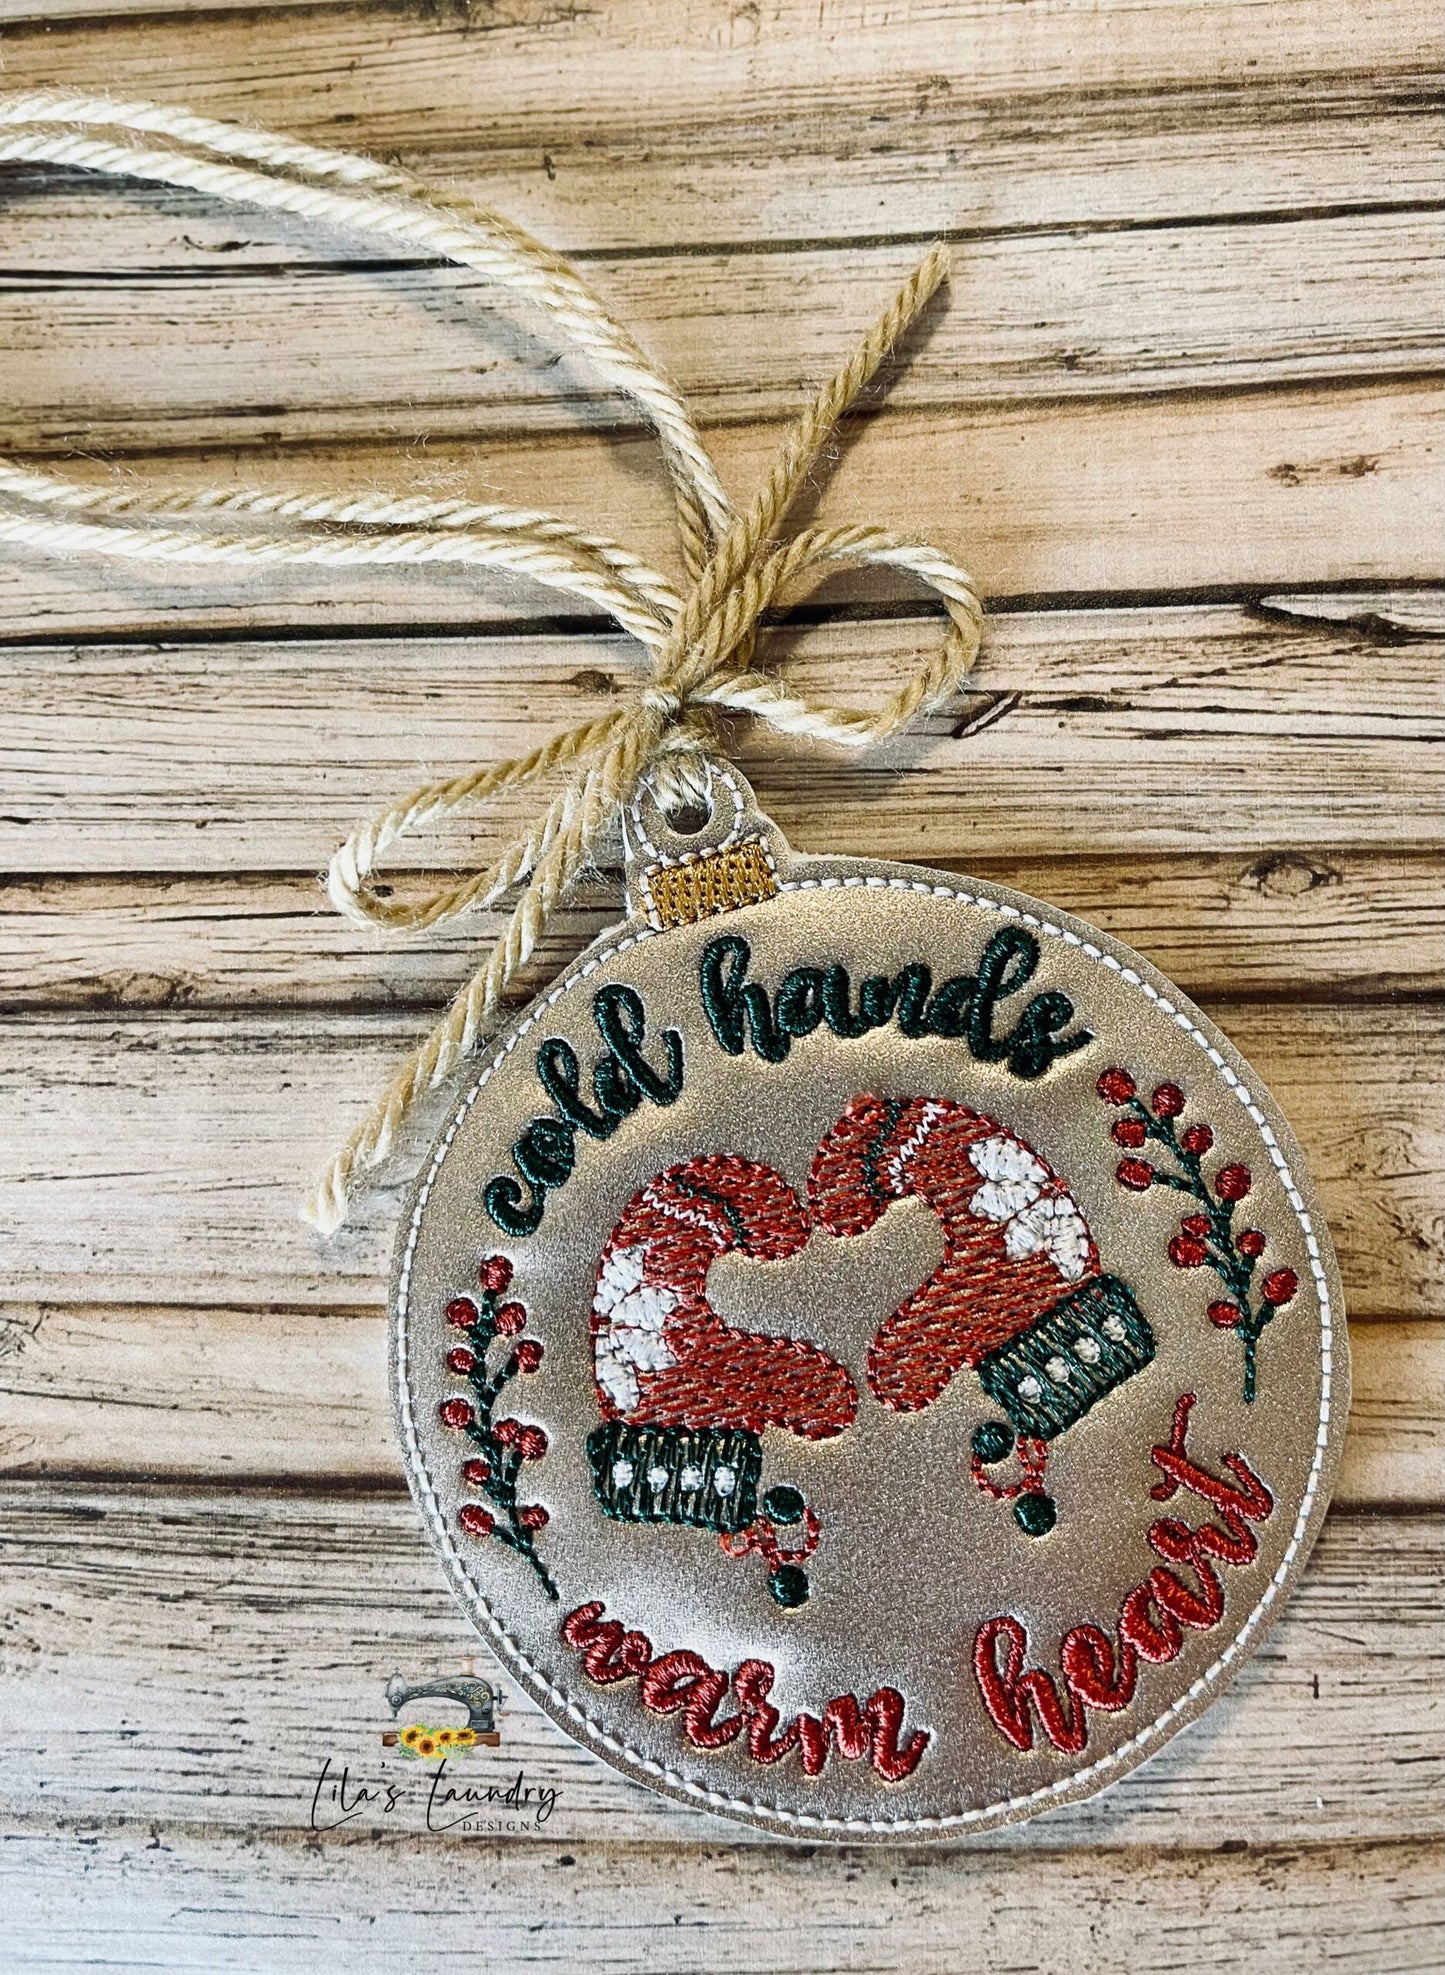 Cold Hands Warm Heart Ornament - Digital File - Embroidery Design